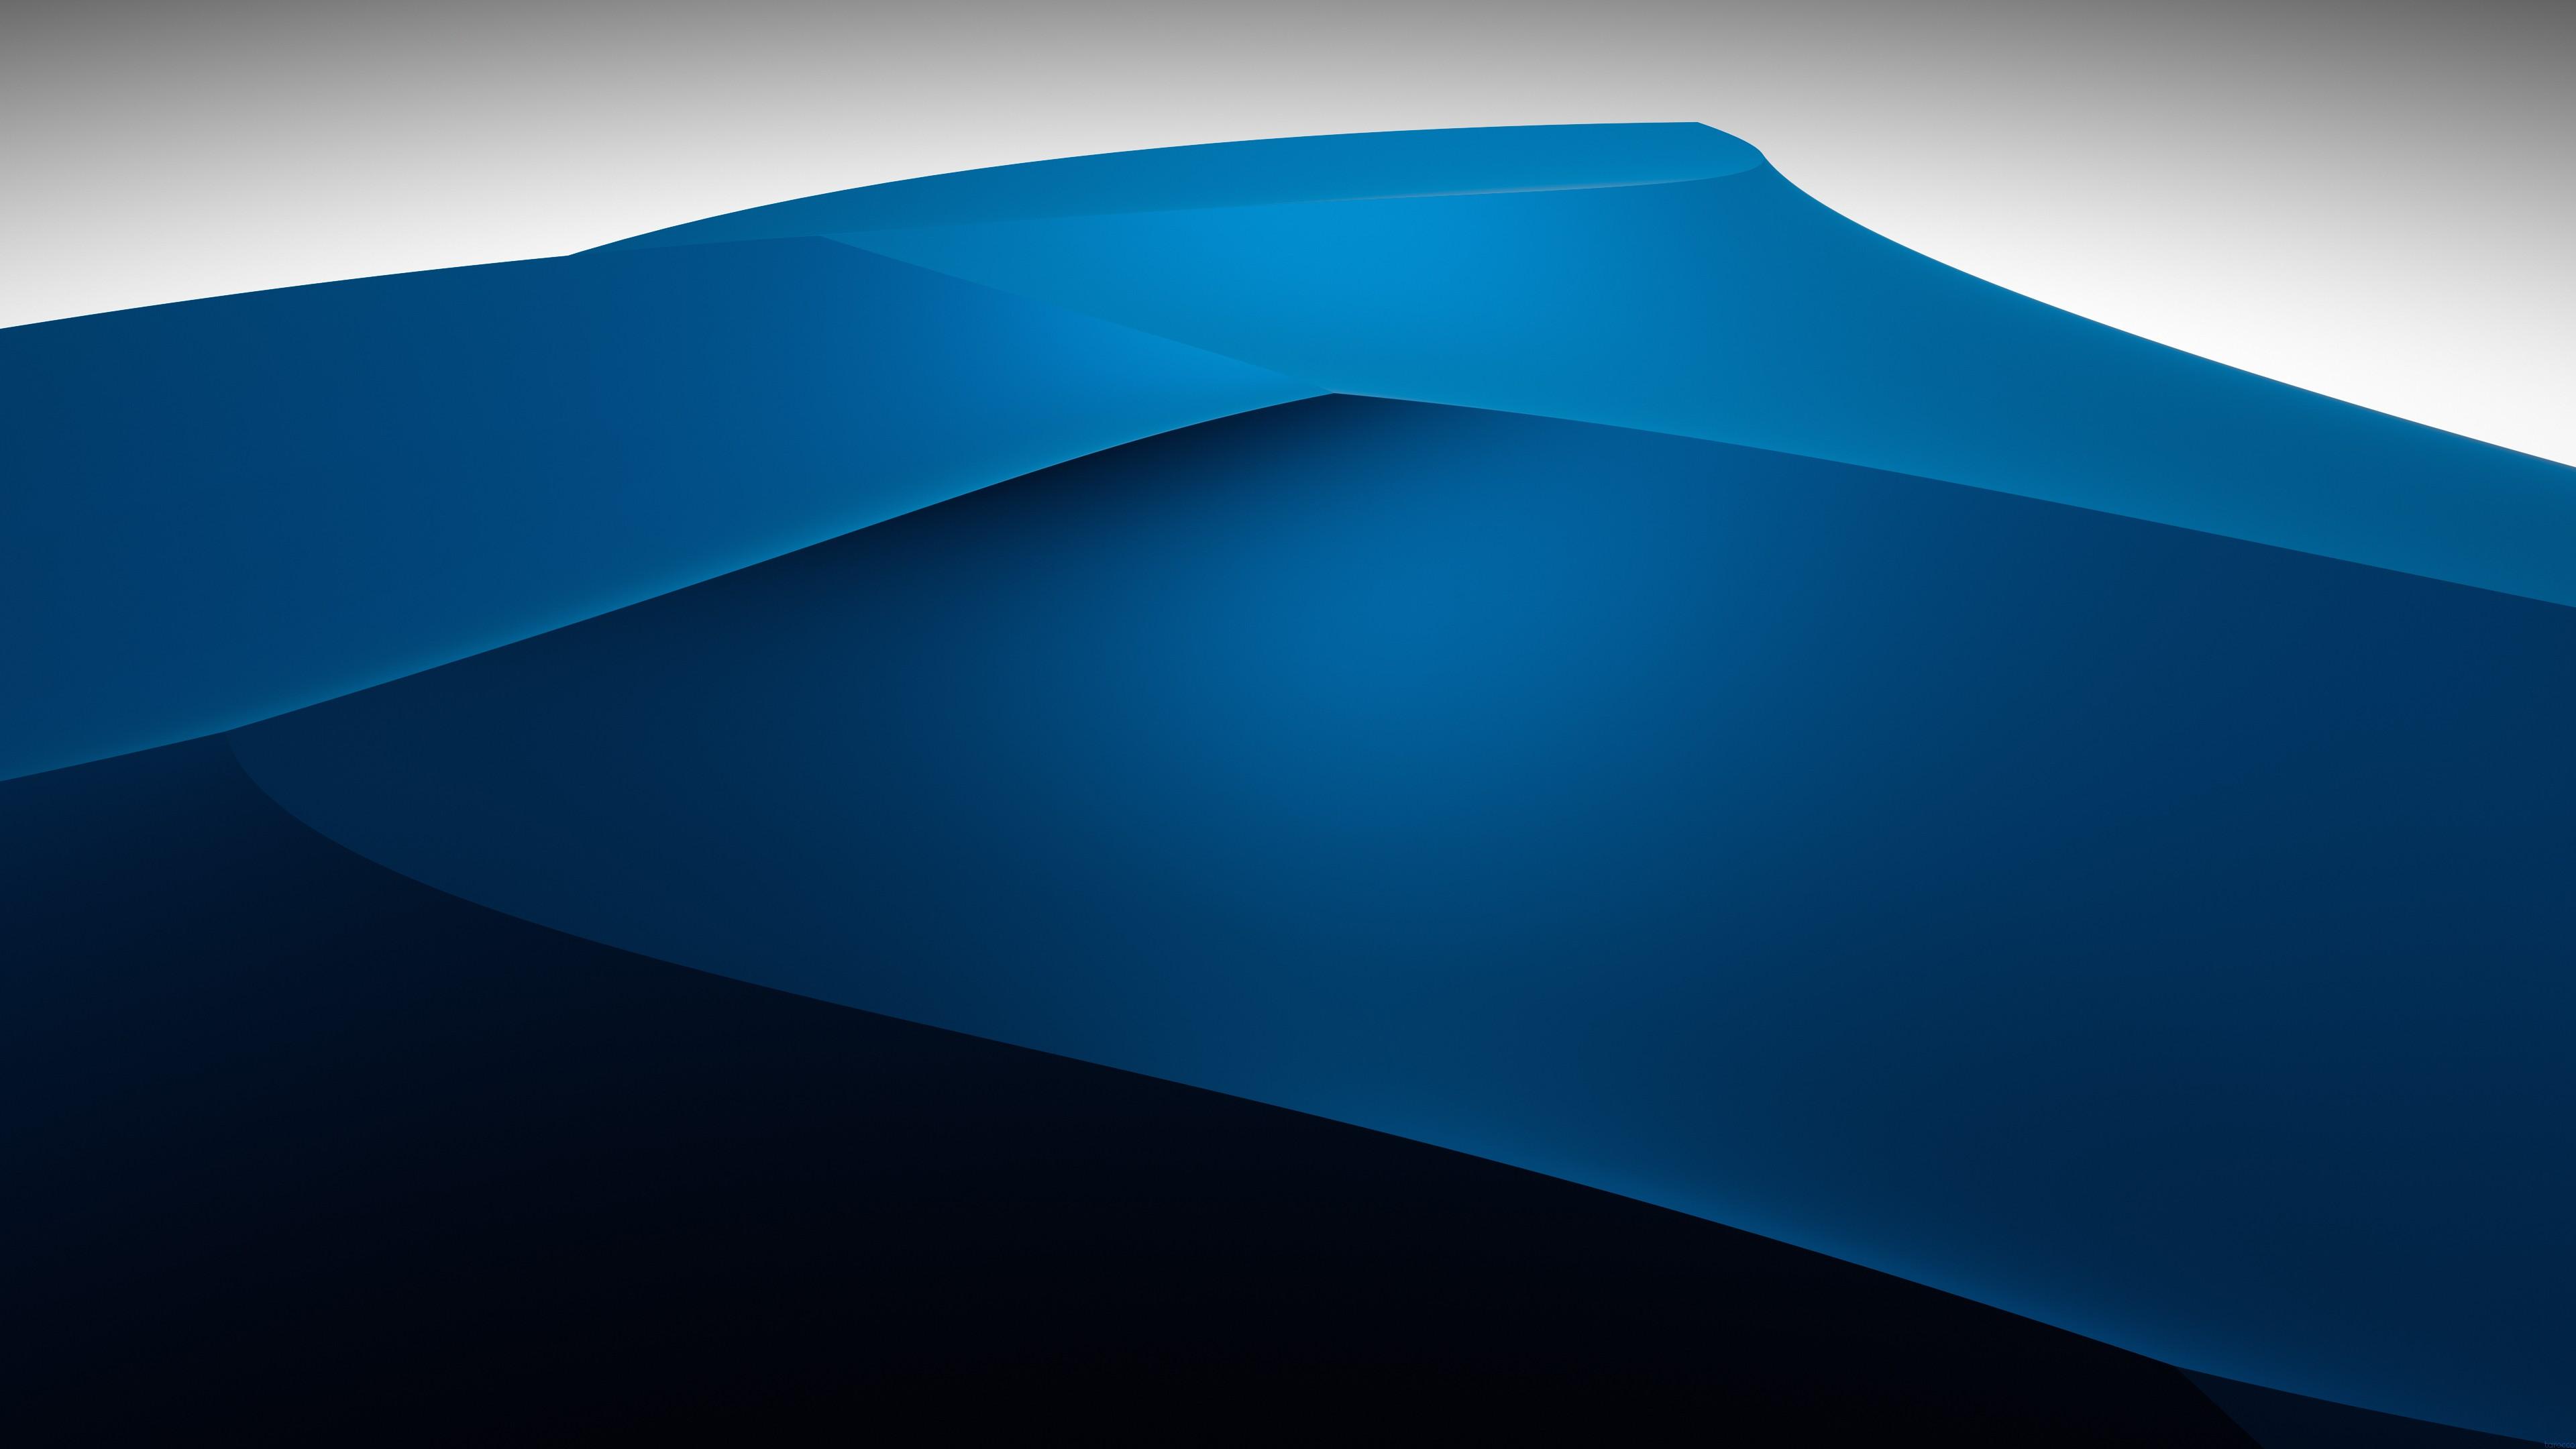 Blue Mountains Minmalism, HD Artist, 4k Wallpaper, Image